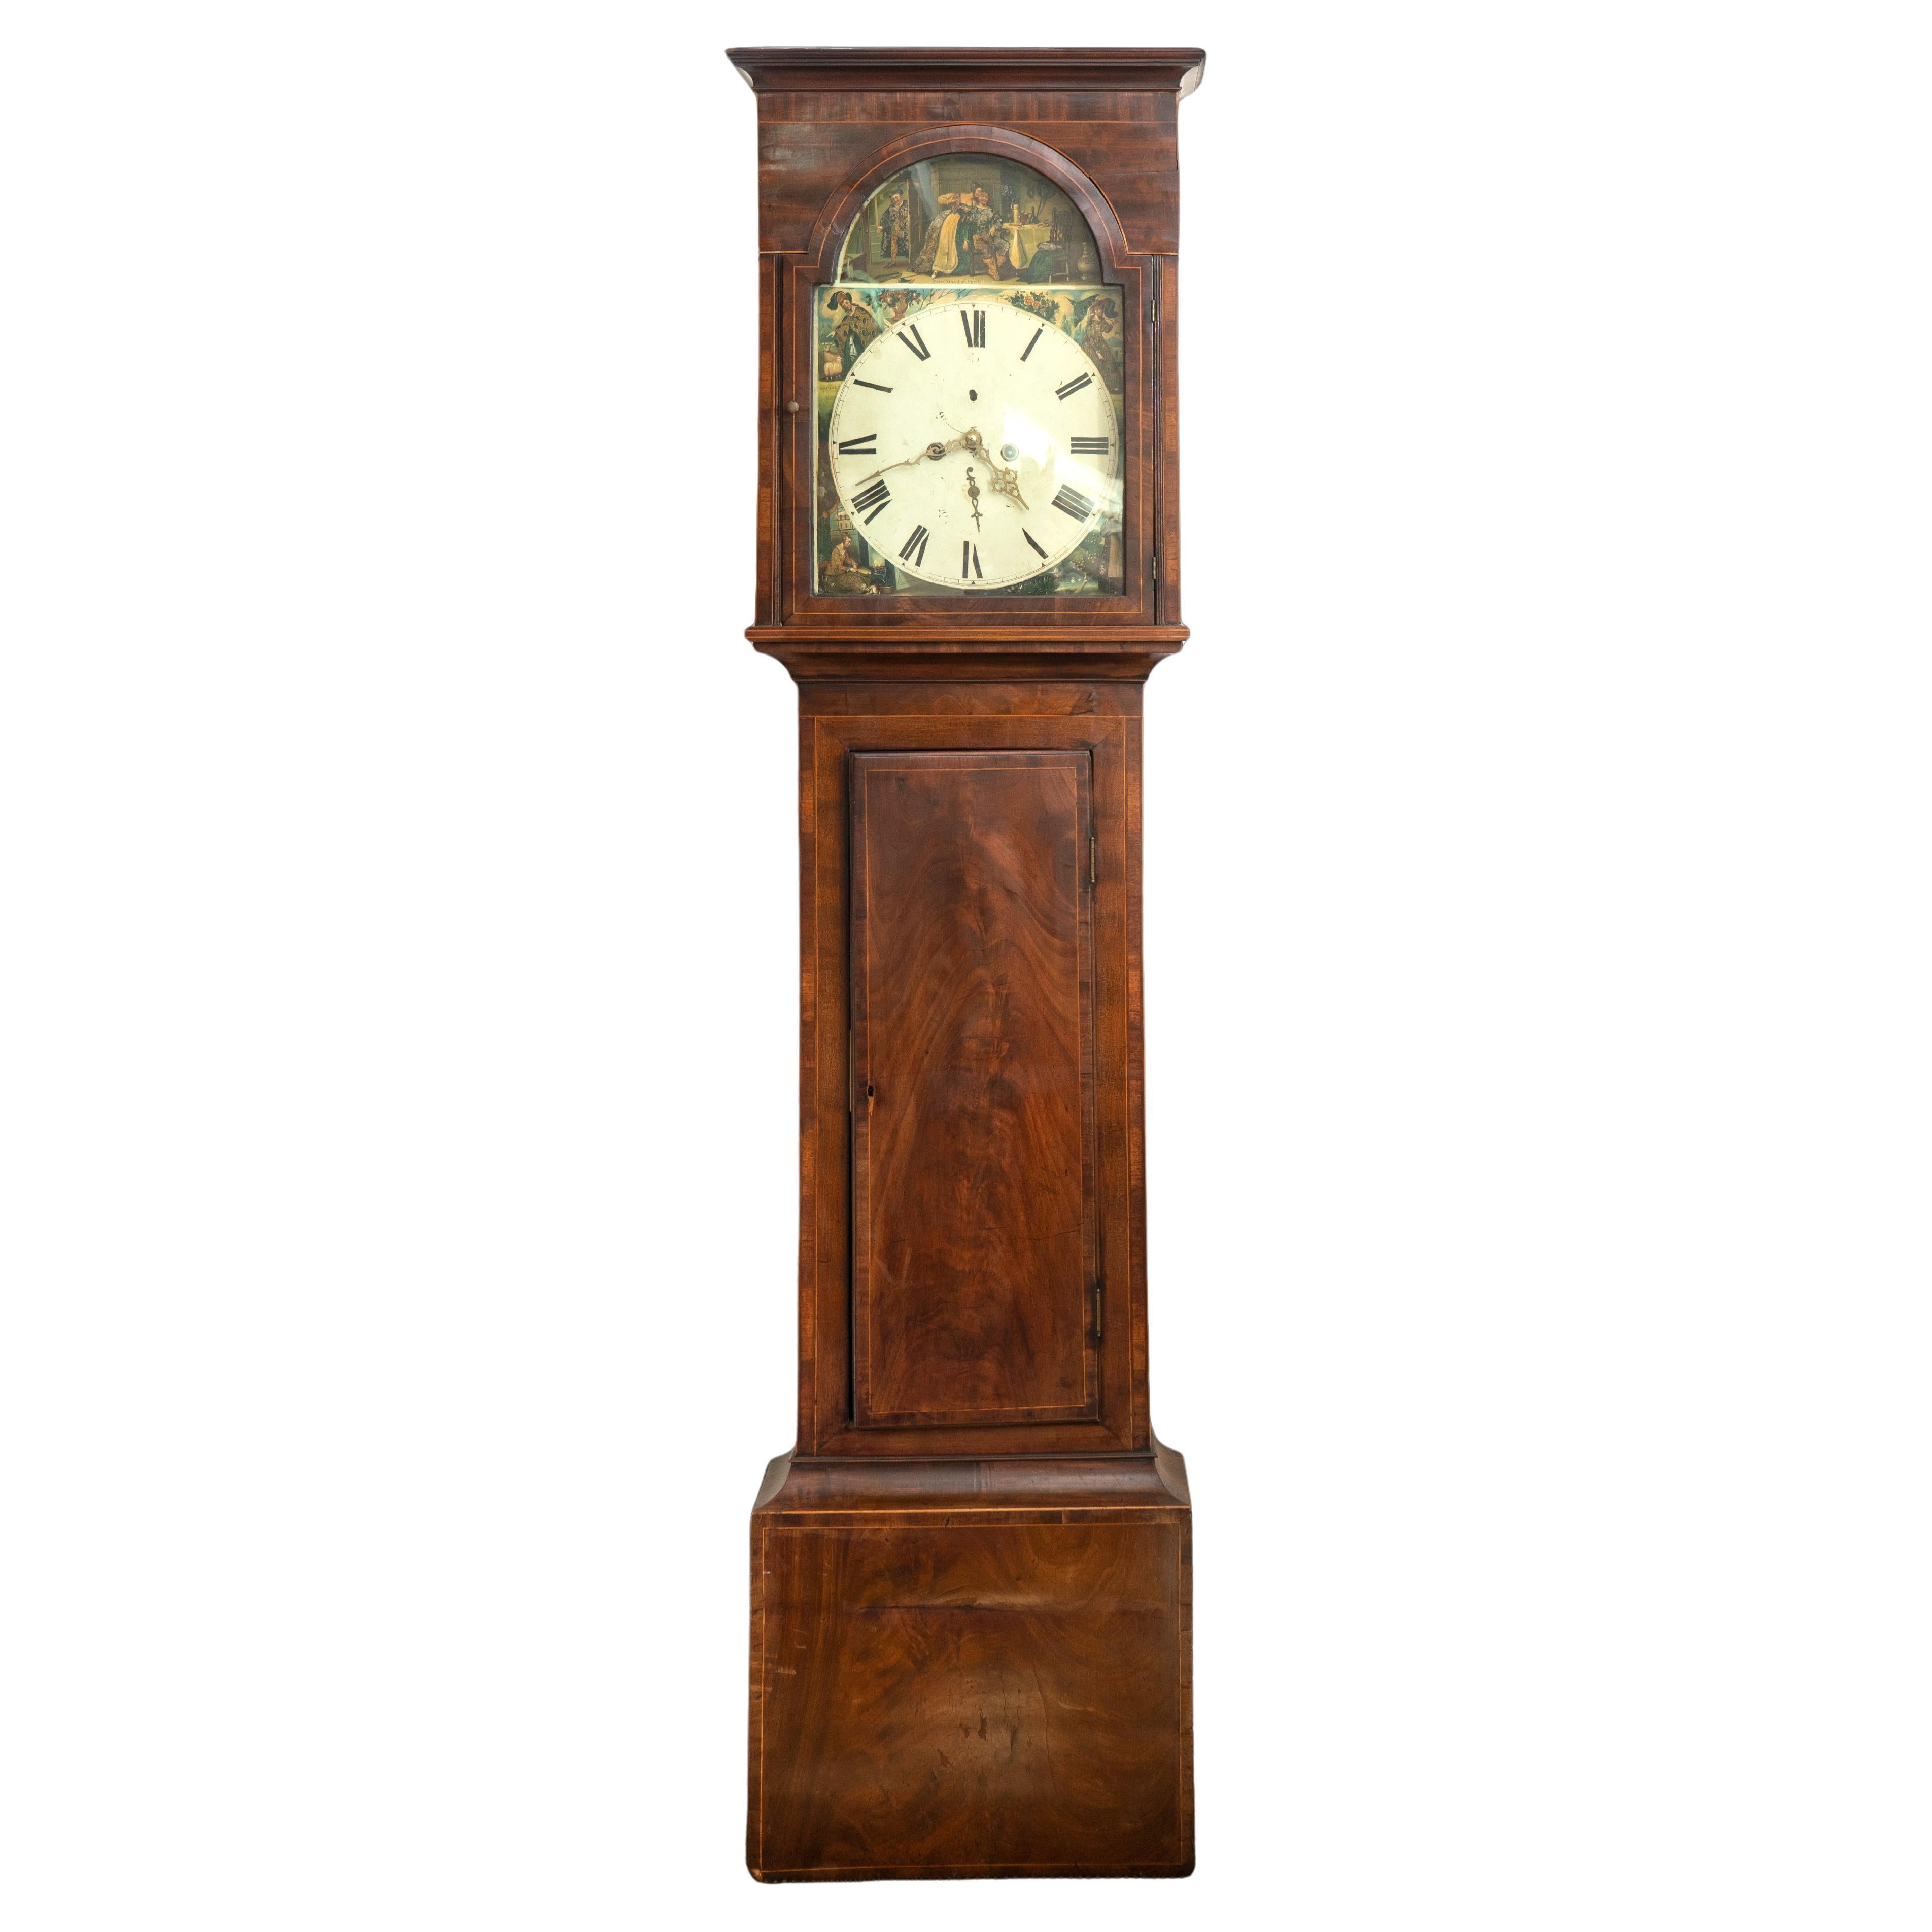 Scottish Grandfather Clock